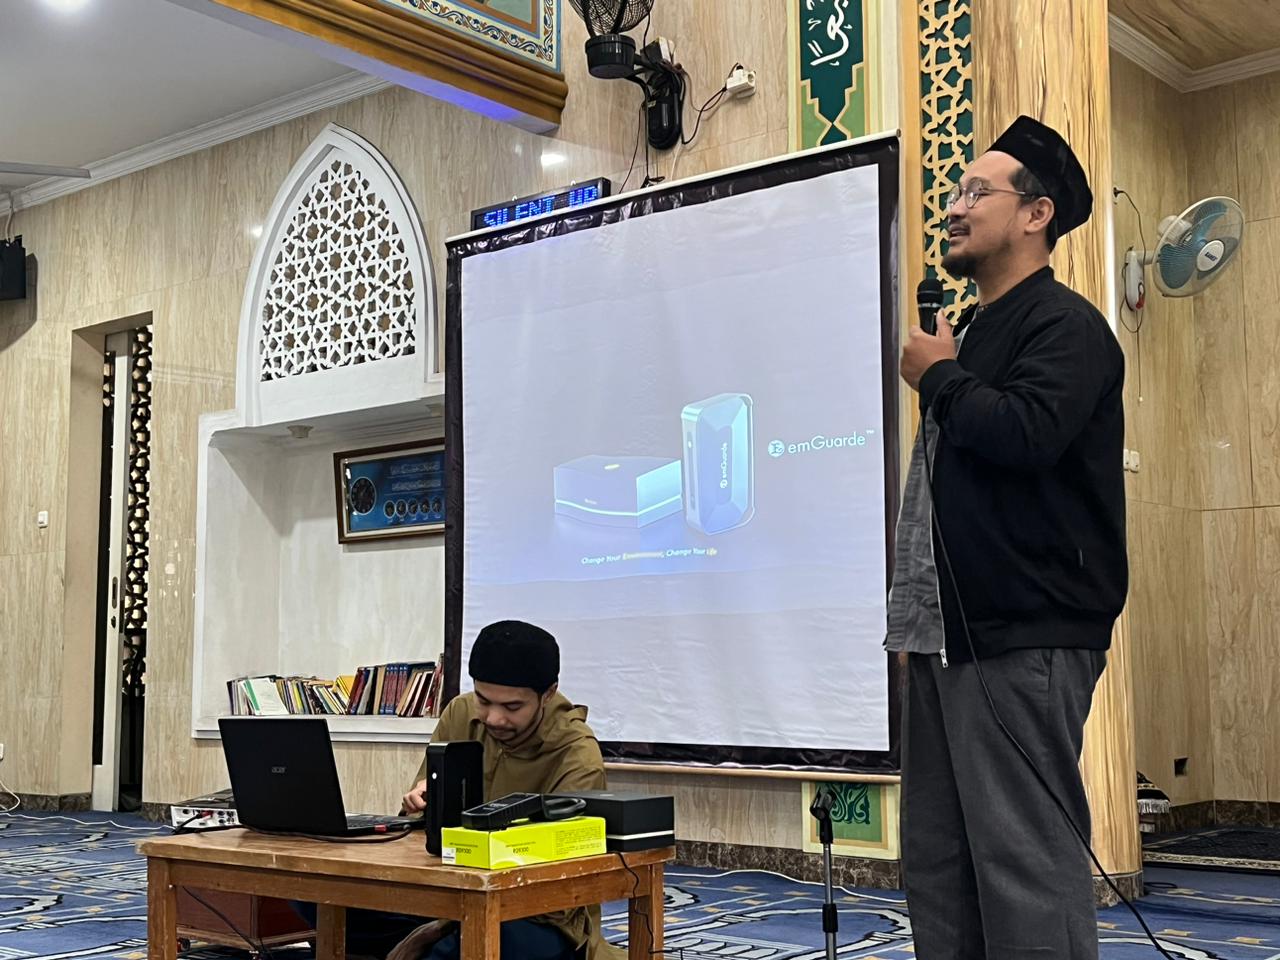 Seminar Ramadhan Bahaya Radiasi Elektromagnetik #1 Masjid At Taqwa (3)